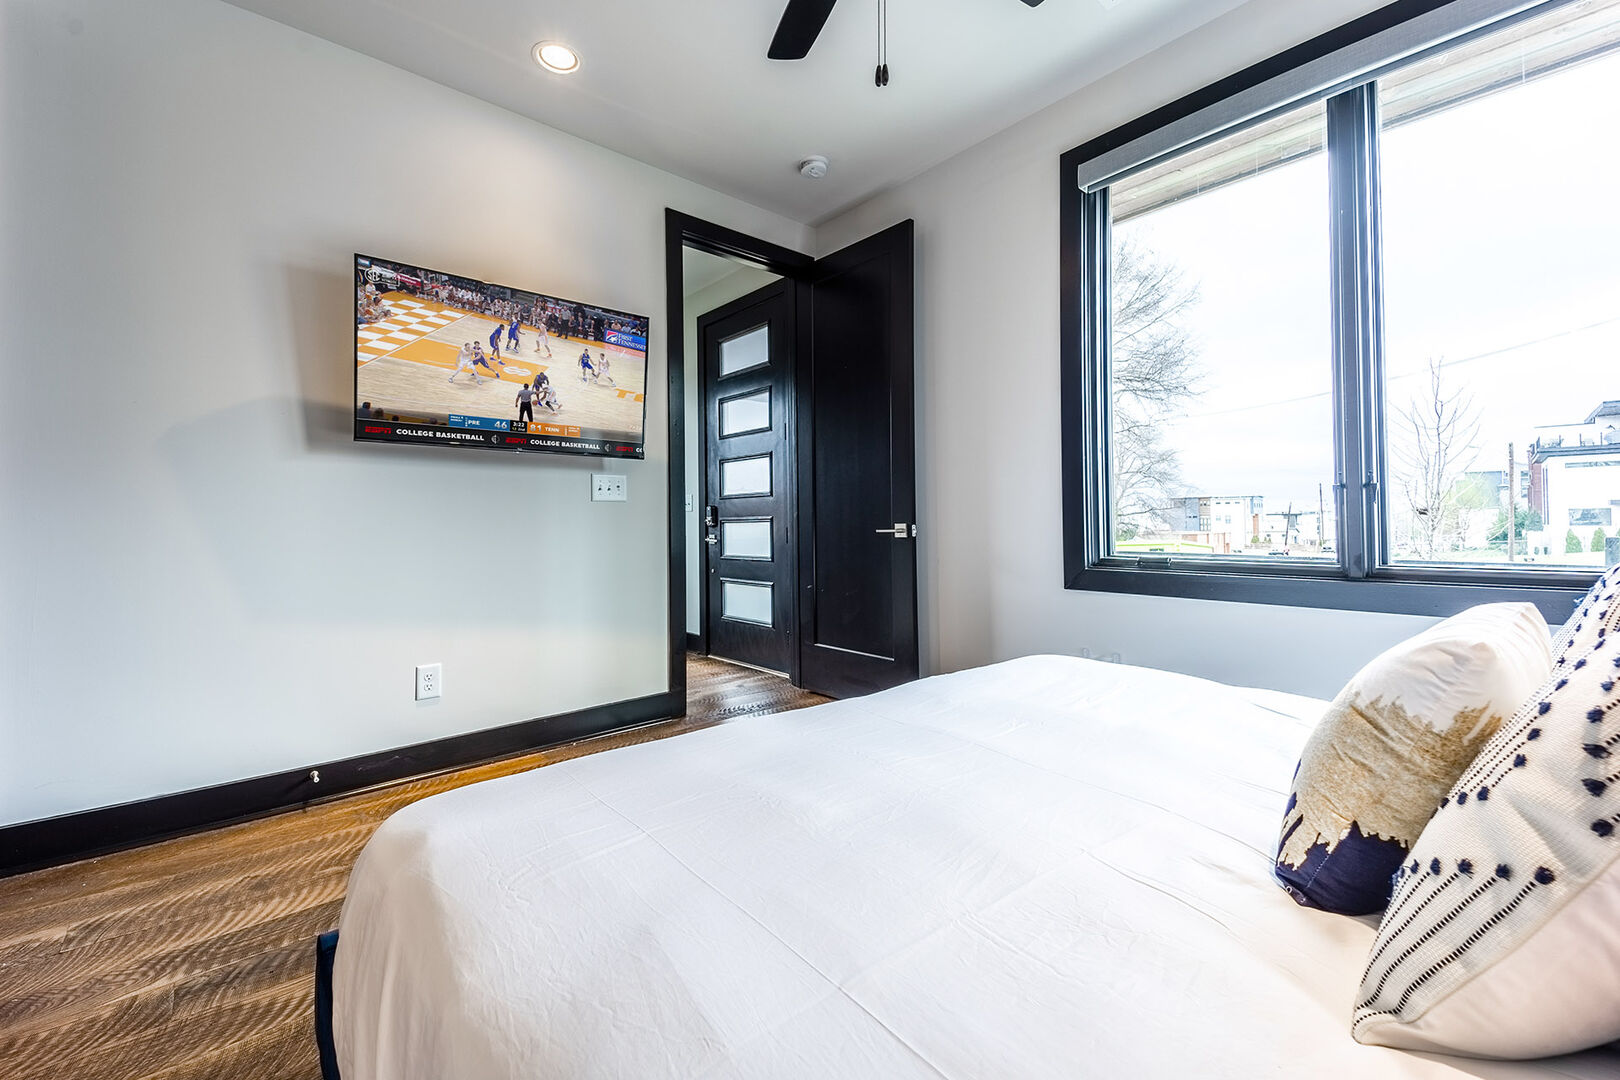 2nd unit: 4th bedroom (1st floor) with King bed, smart TV, and en-suite bathroom.